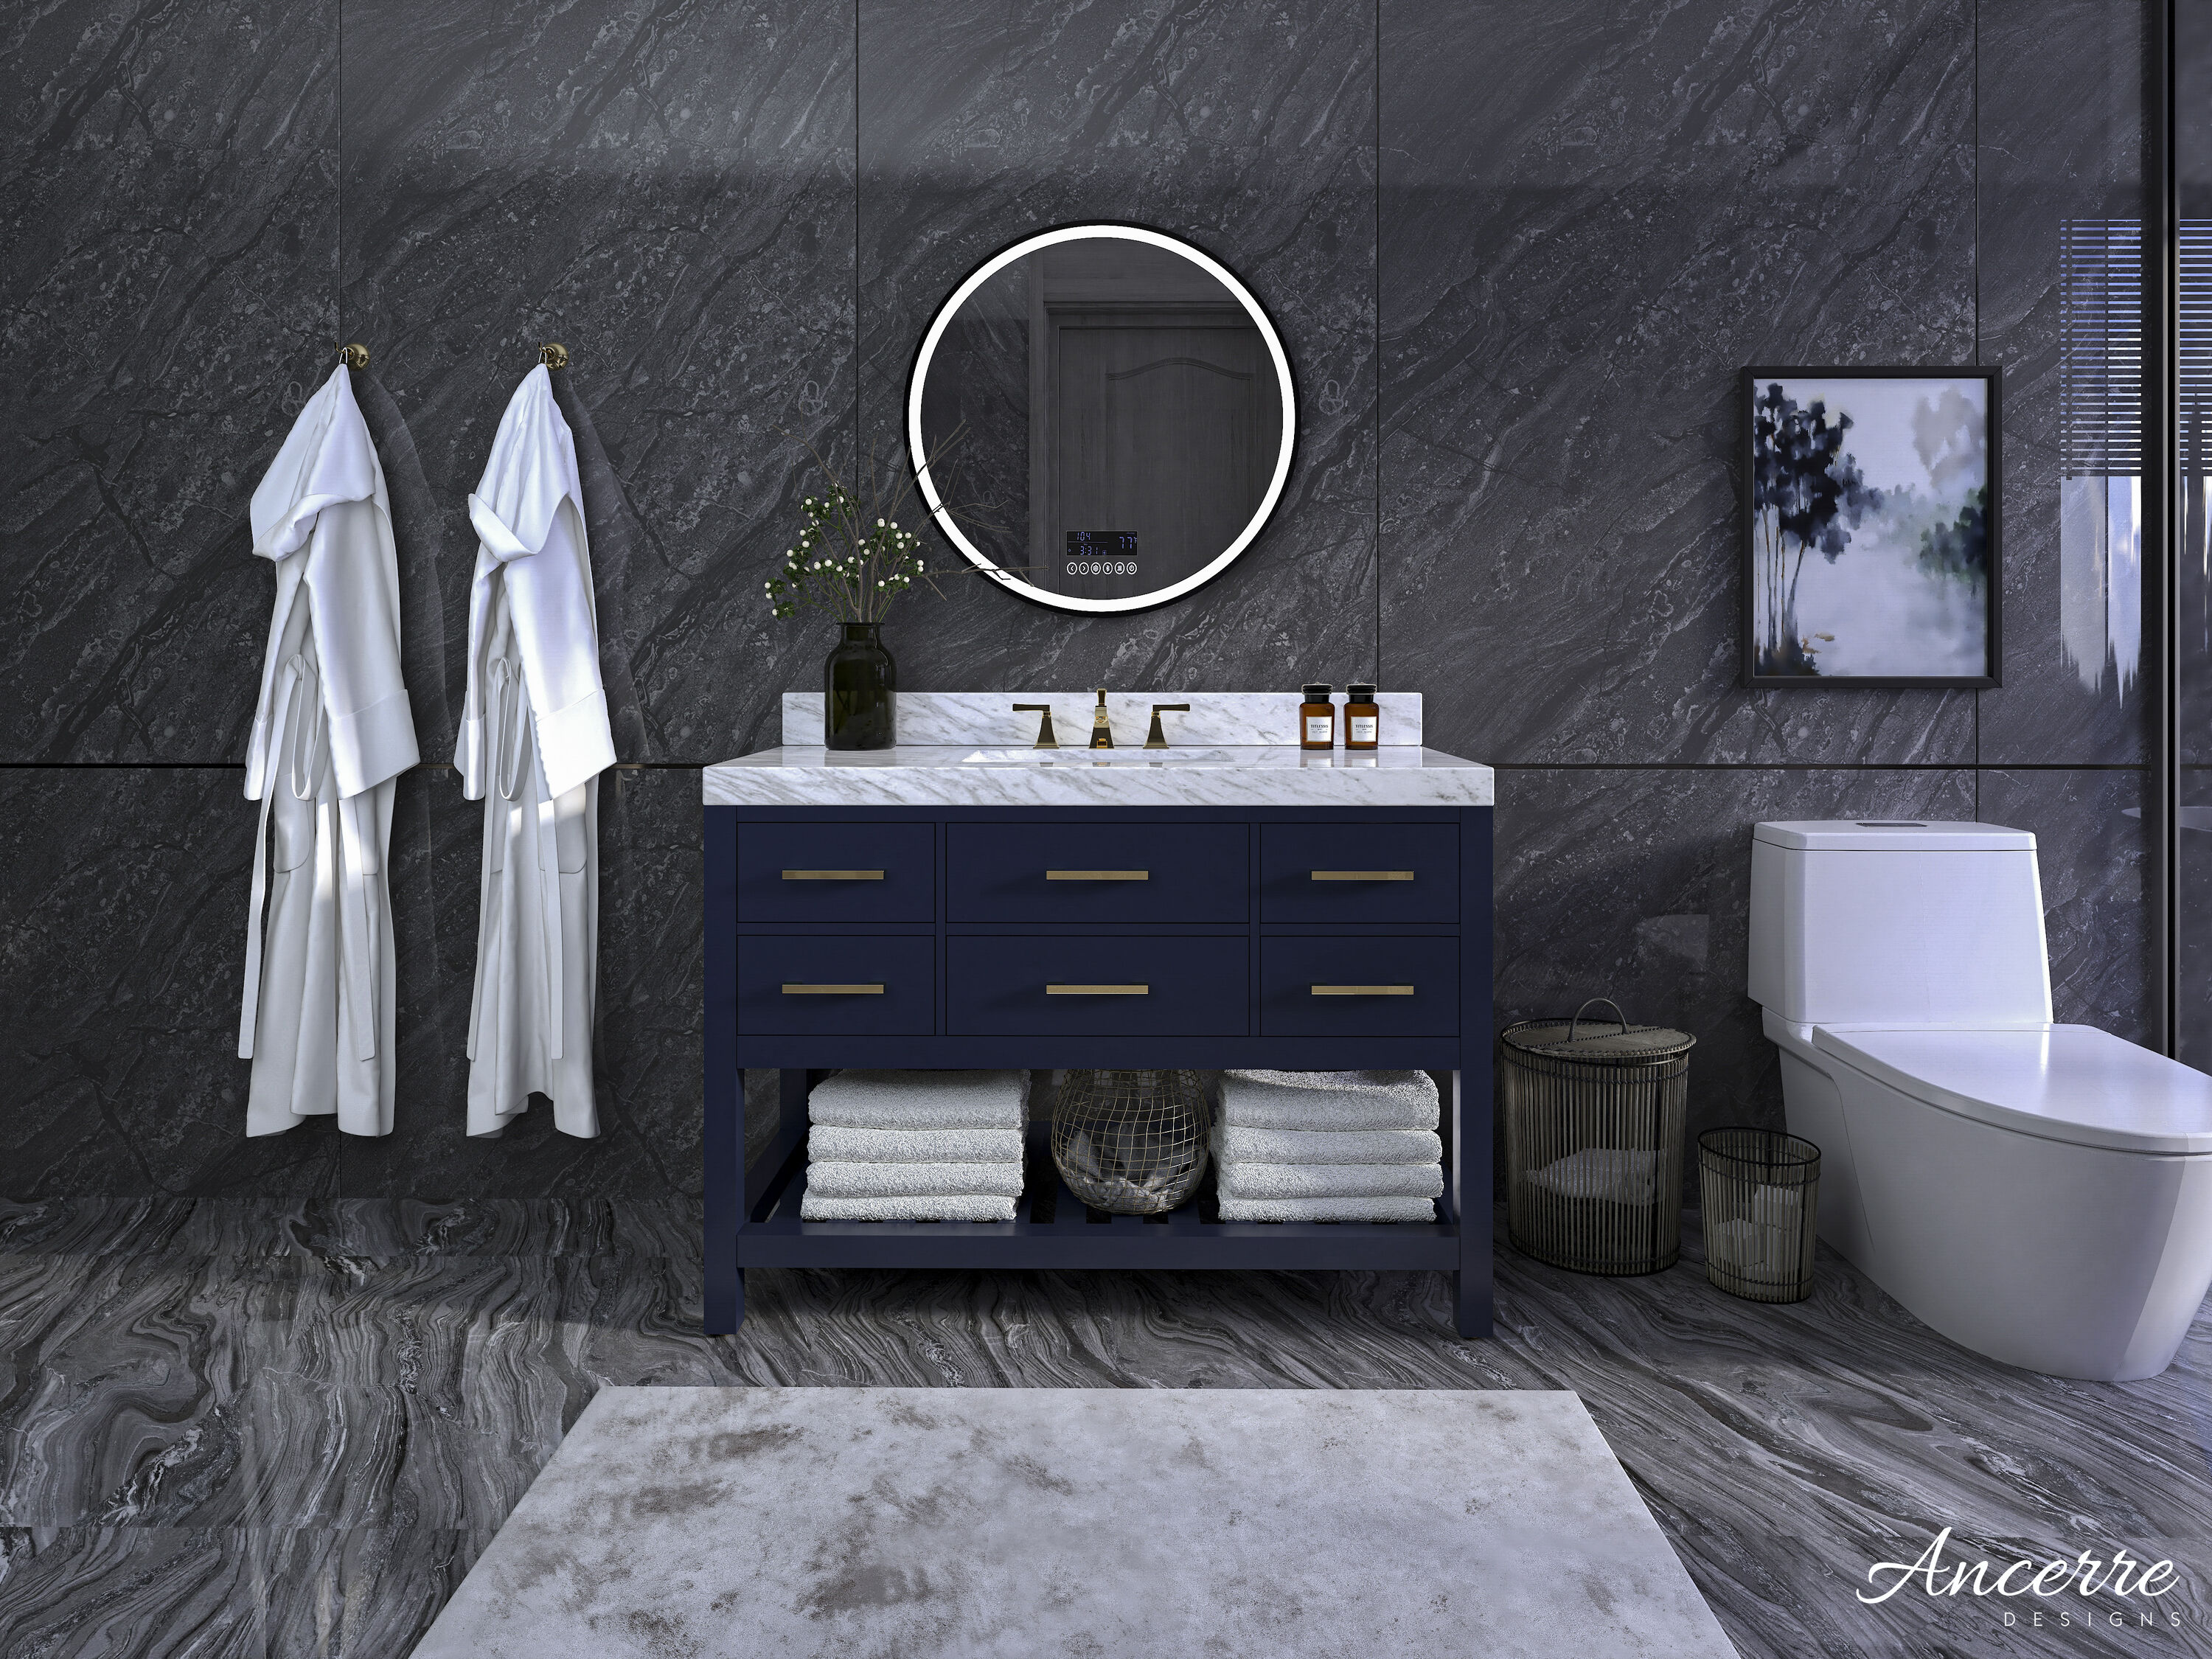 Ancerre Designs Elizabeth 48-in Heritage Blue Undermount Single Sink  Bathroom Vanity with Carrara White Natural Marble Top in the Bathroom  Vanities with Tops department at